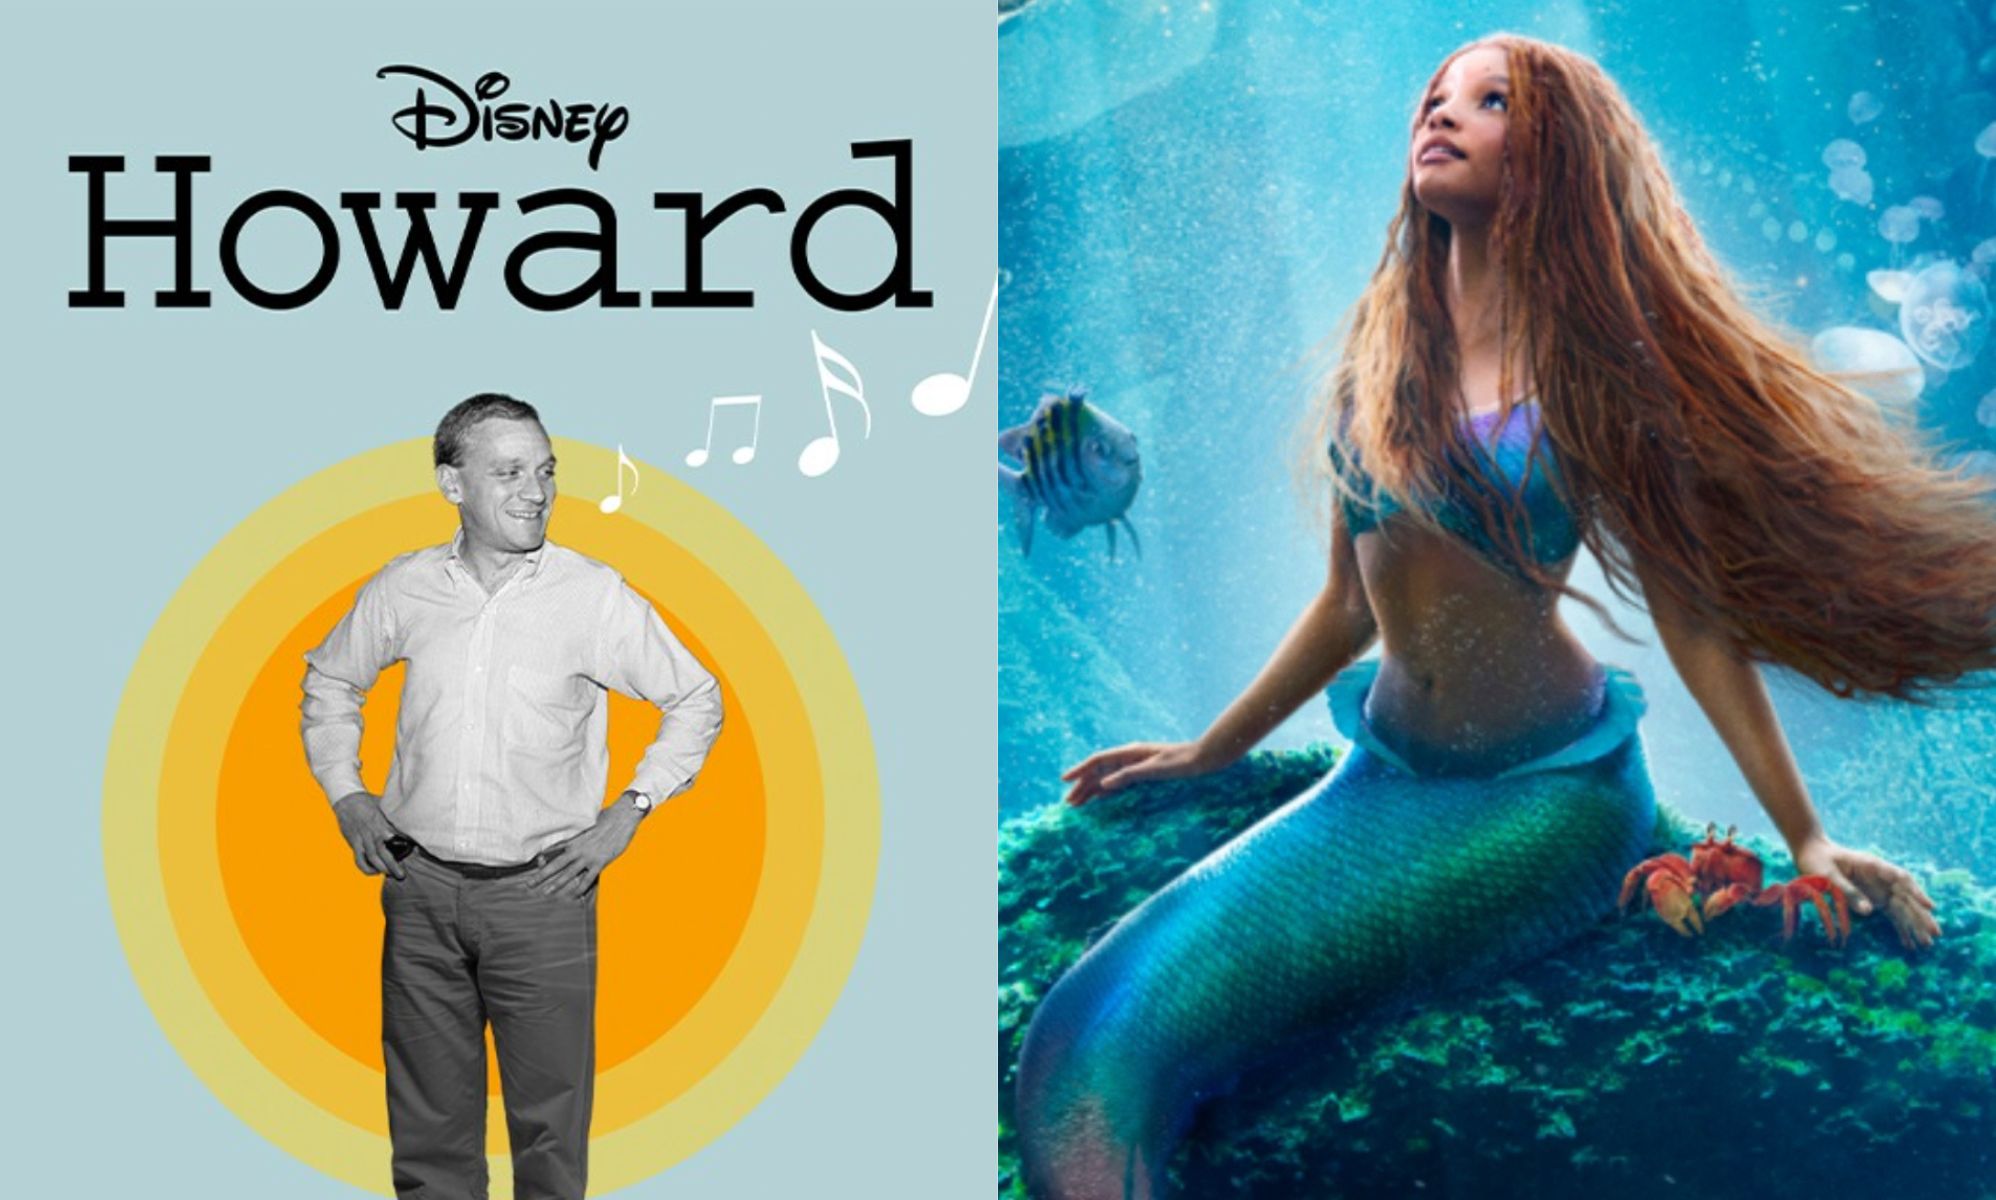 Little Mermaid 2023's Disney+ Viewership Ranking Revealed